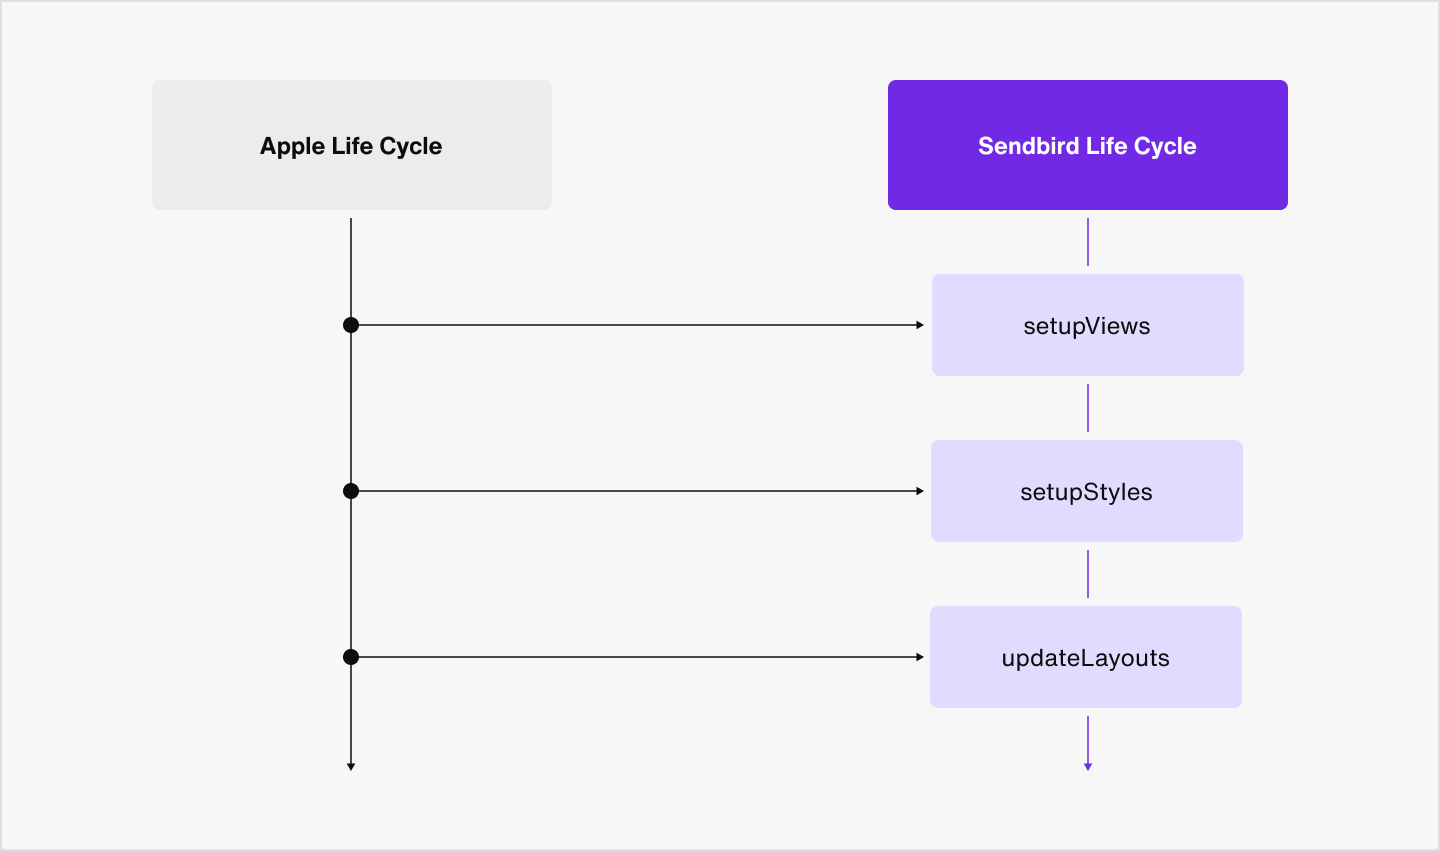 Image|Sendbird UIKit life cycle showing its interfaces next to Apple's UIKit life cycle.